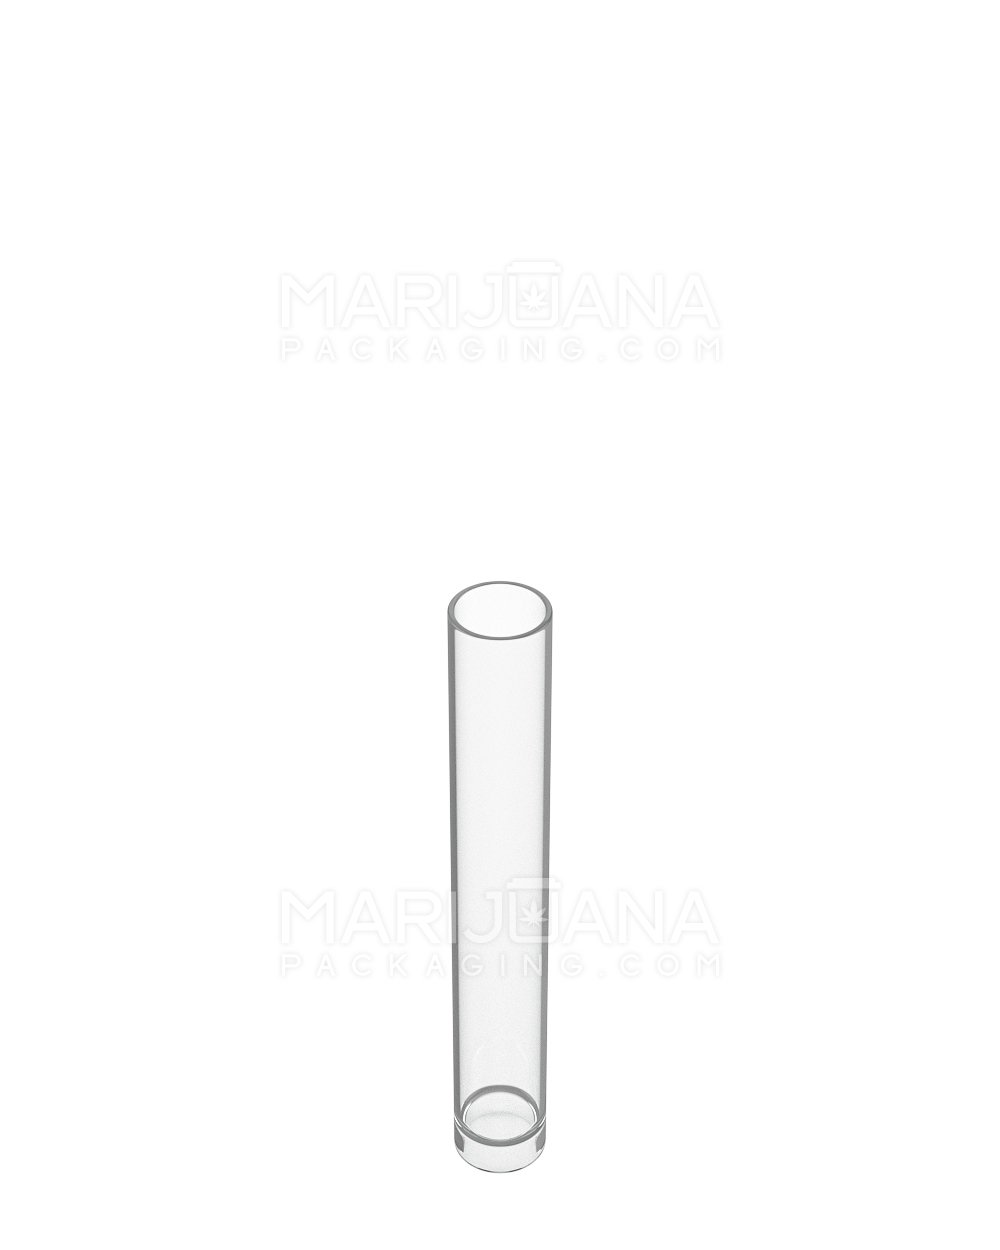 Buttonless Vape Cartridge Tube w/ Black Cap | 86mm - Clear Plastic - 500 Count - 3